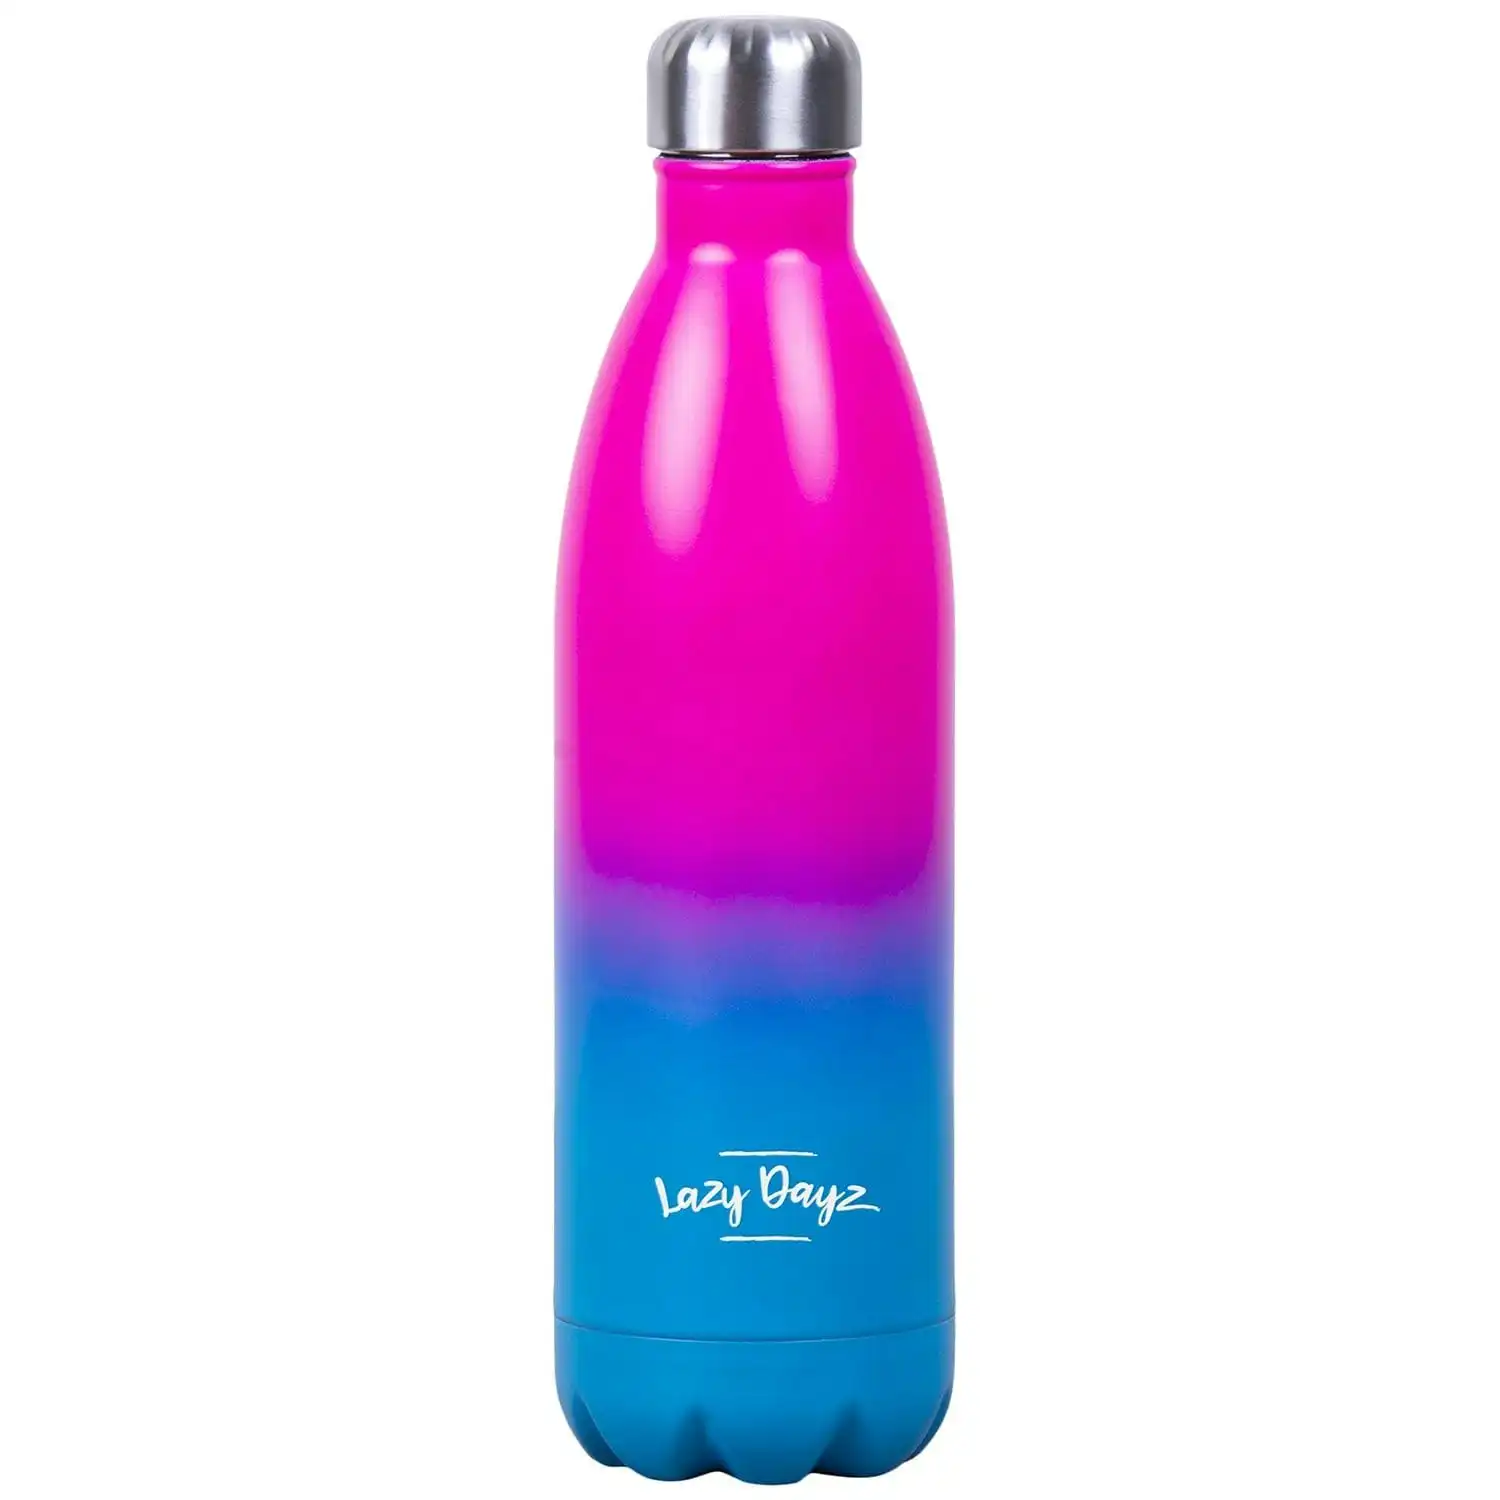 Lazy Dayz Jumbo Drink Bottle 1L - Pink Blue Ombre